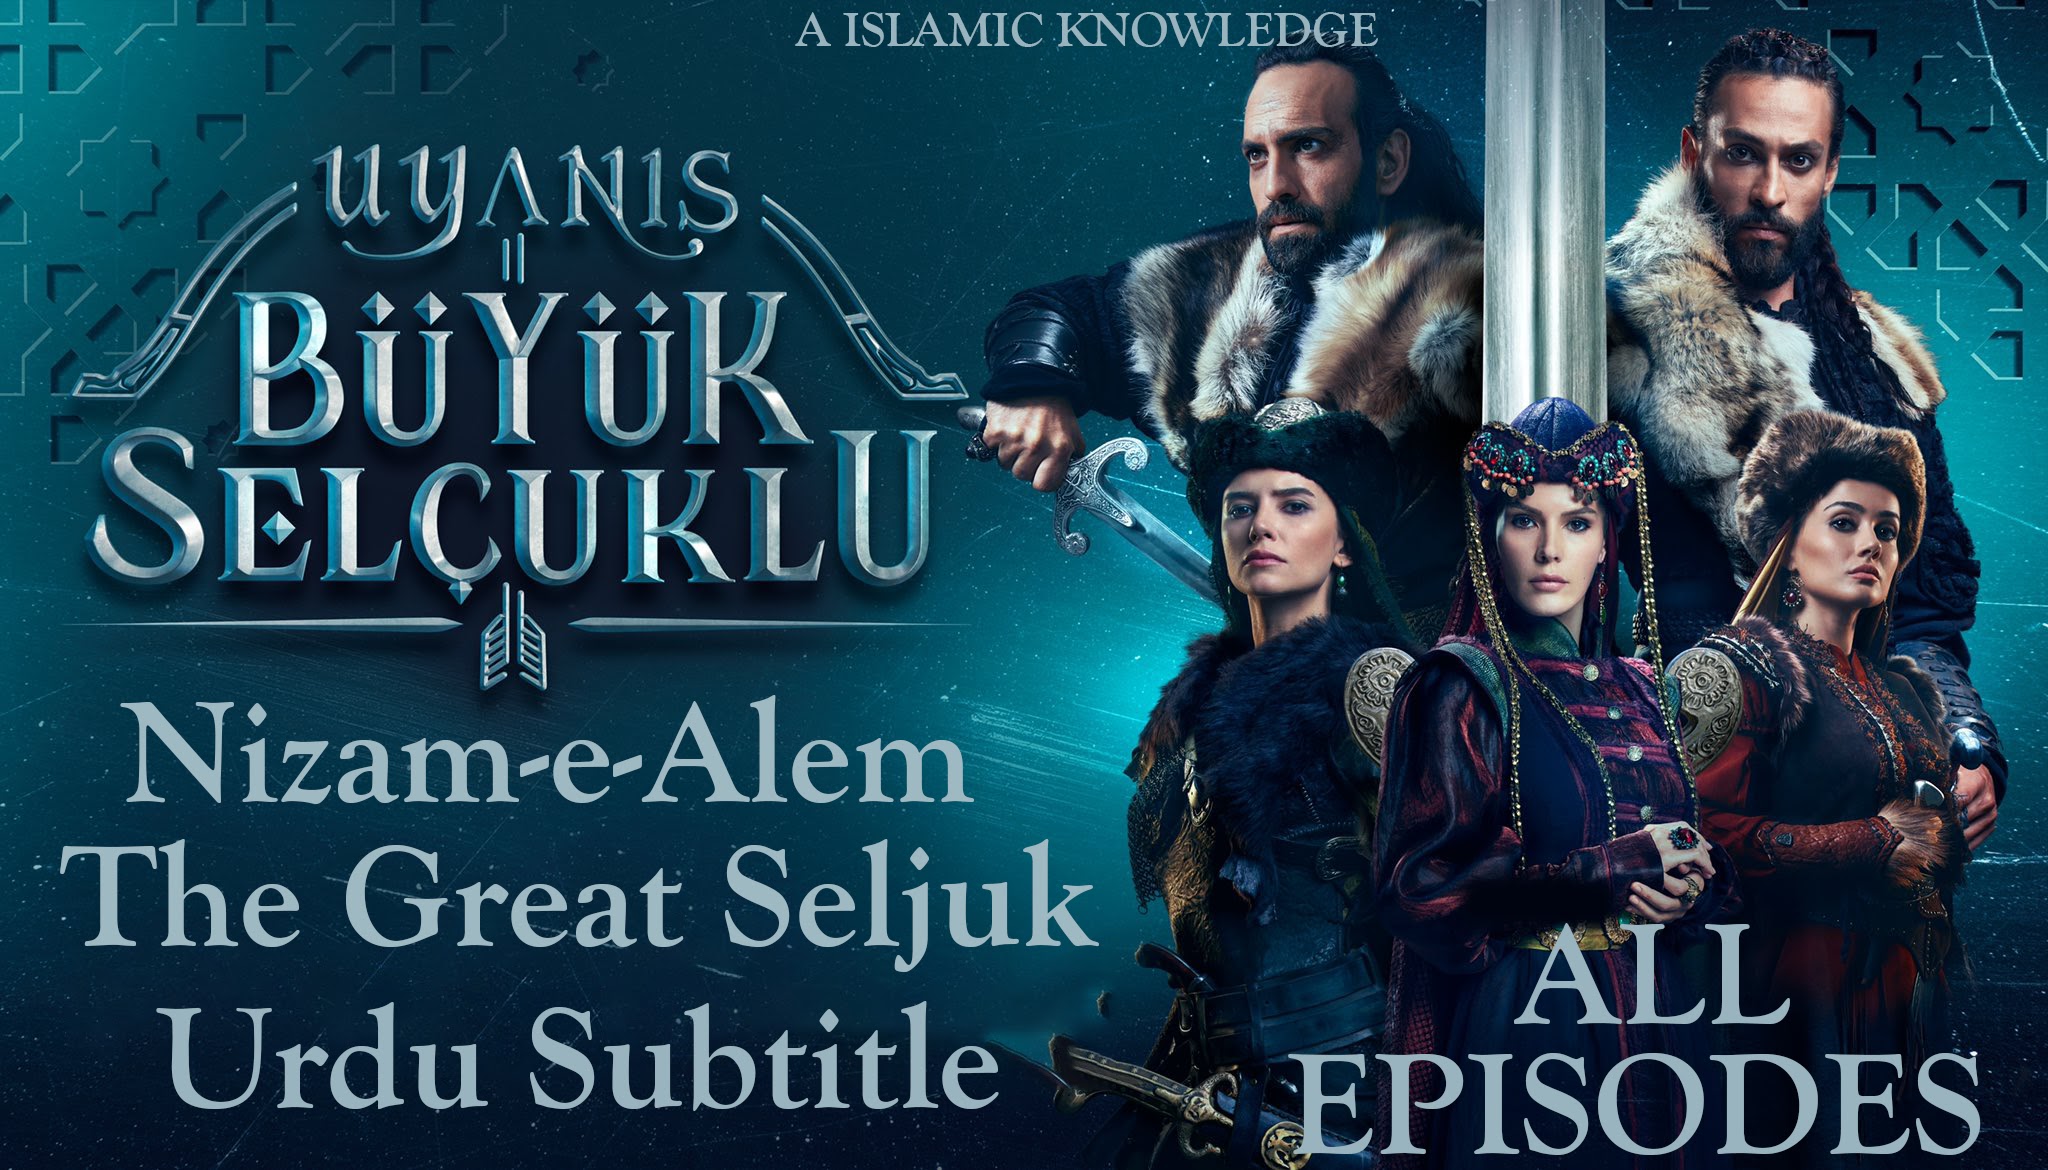 Uyanis Buyuk Selcuklu - Nizam e Alem - The Great Seljuk all Episodes in Urdu Subtitle